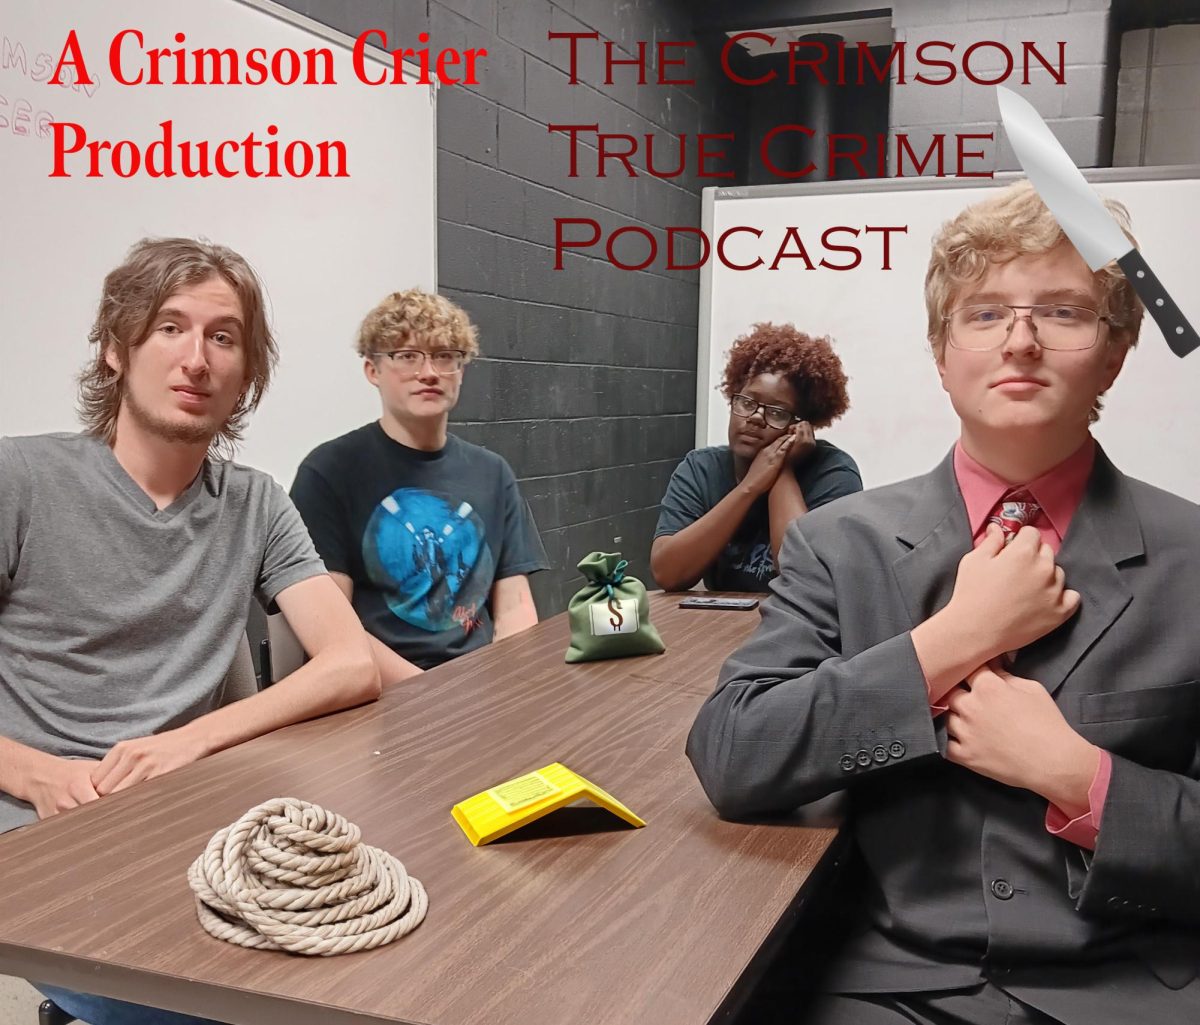 True Crime Podcast-Episode Two